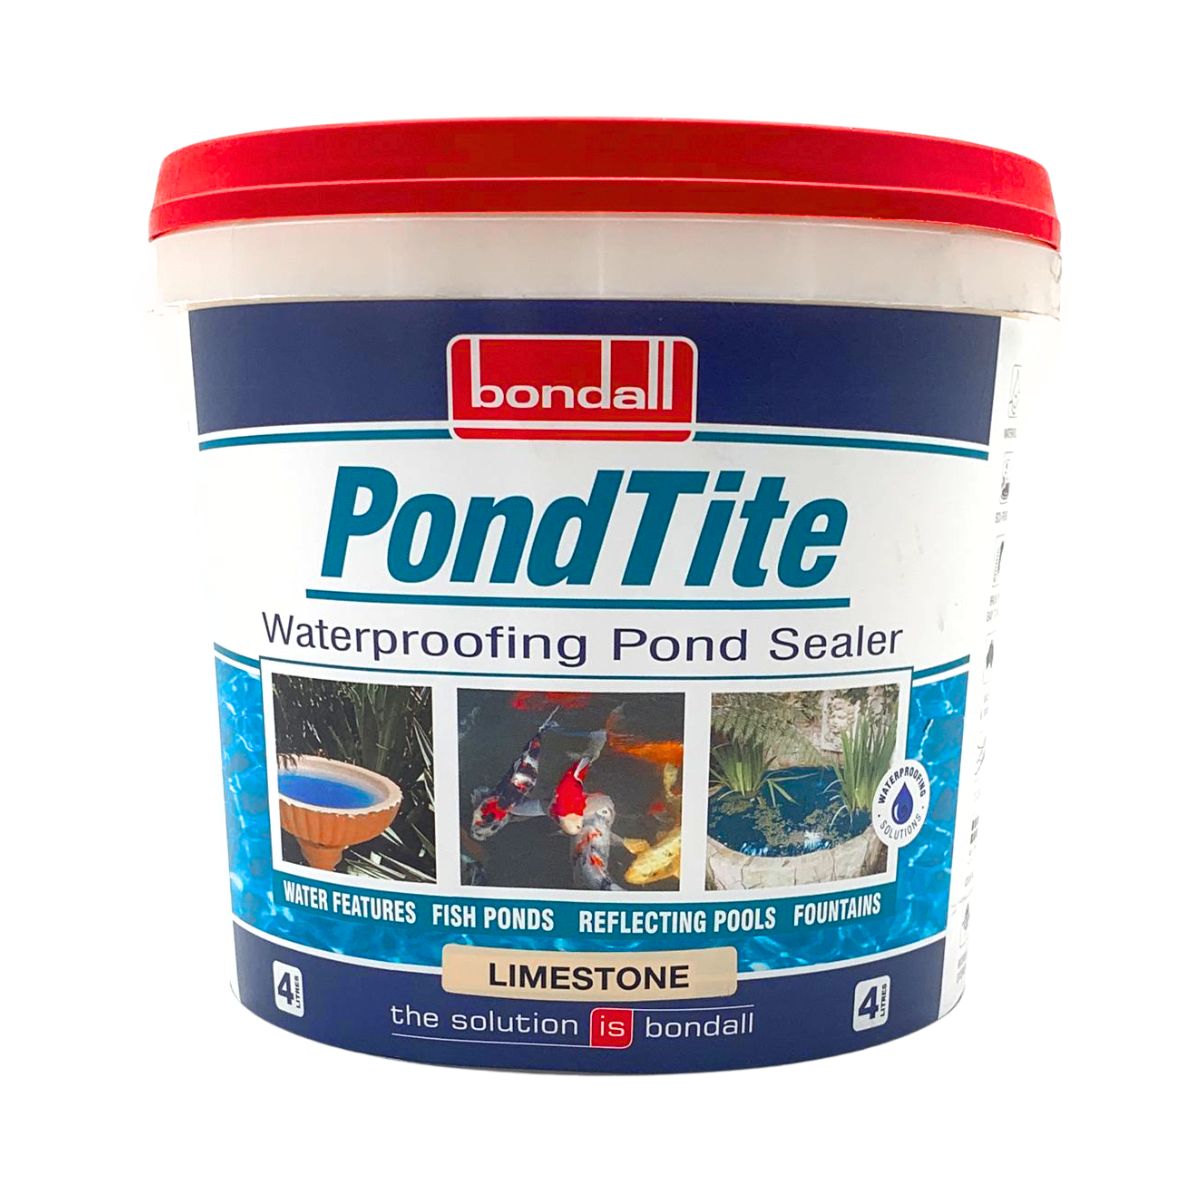 Bondall Pondtite Waterproofing Pond Sealer | 4 Litres - South East Clearance Centre